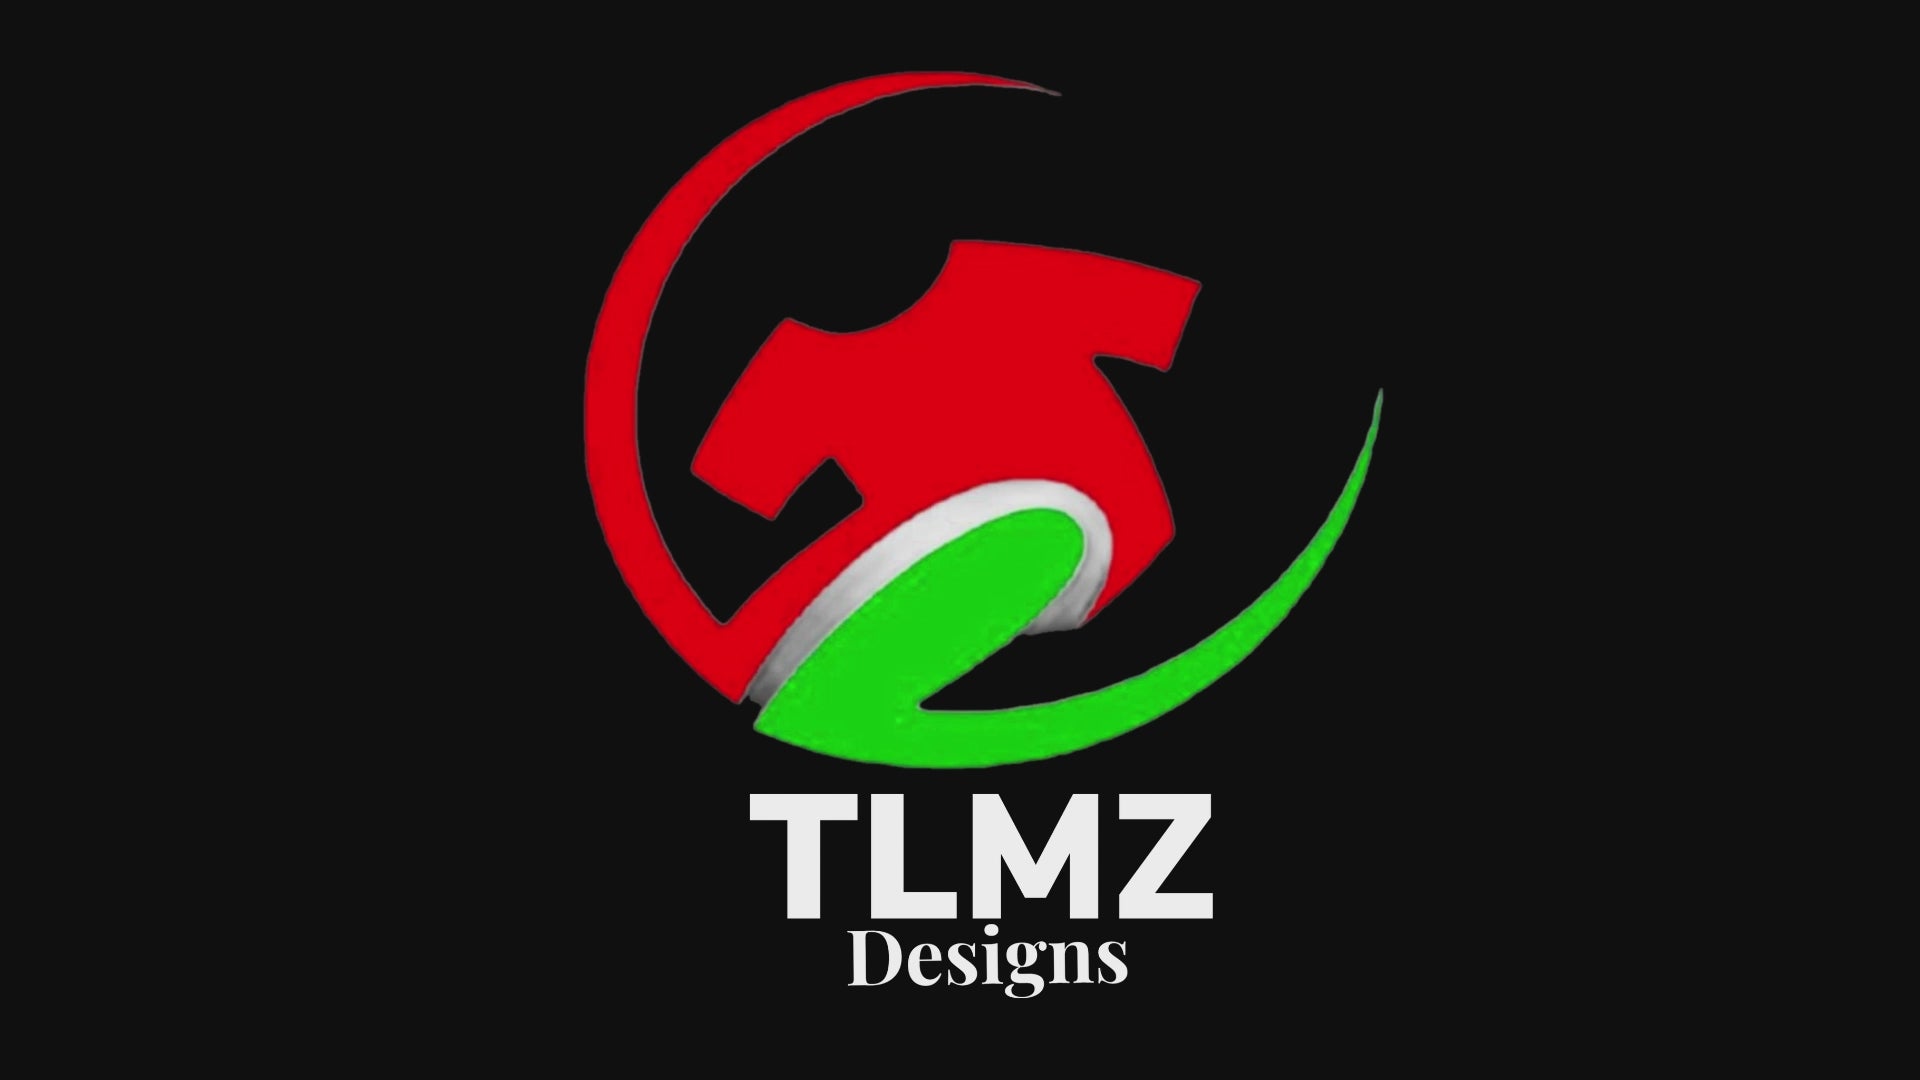 TLMZ Designs